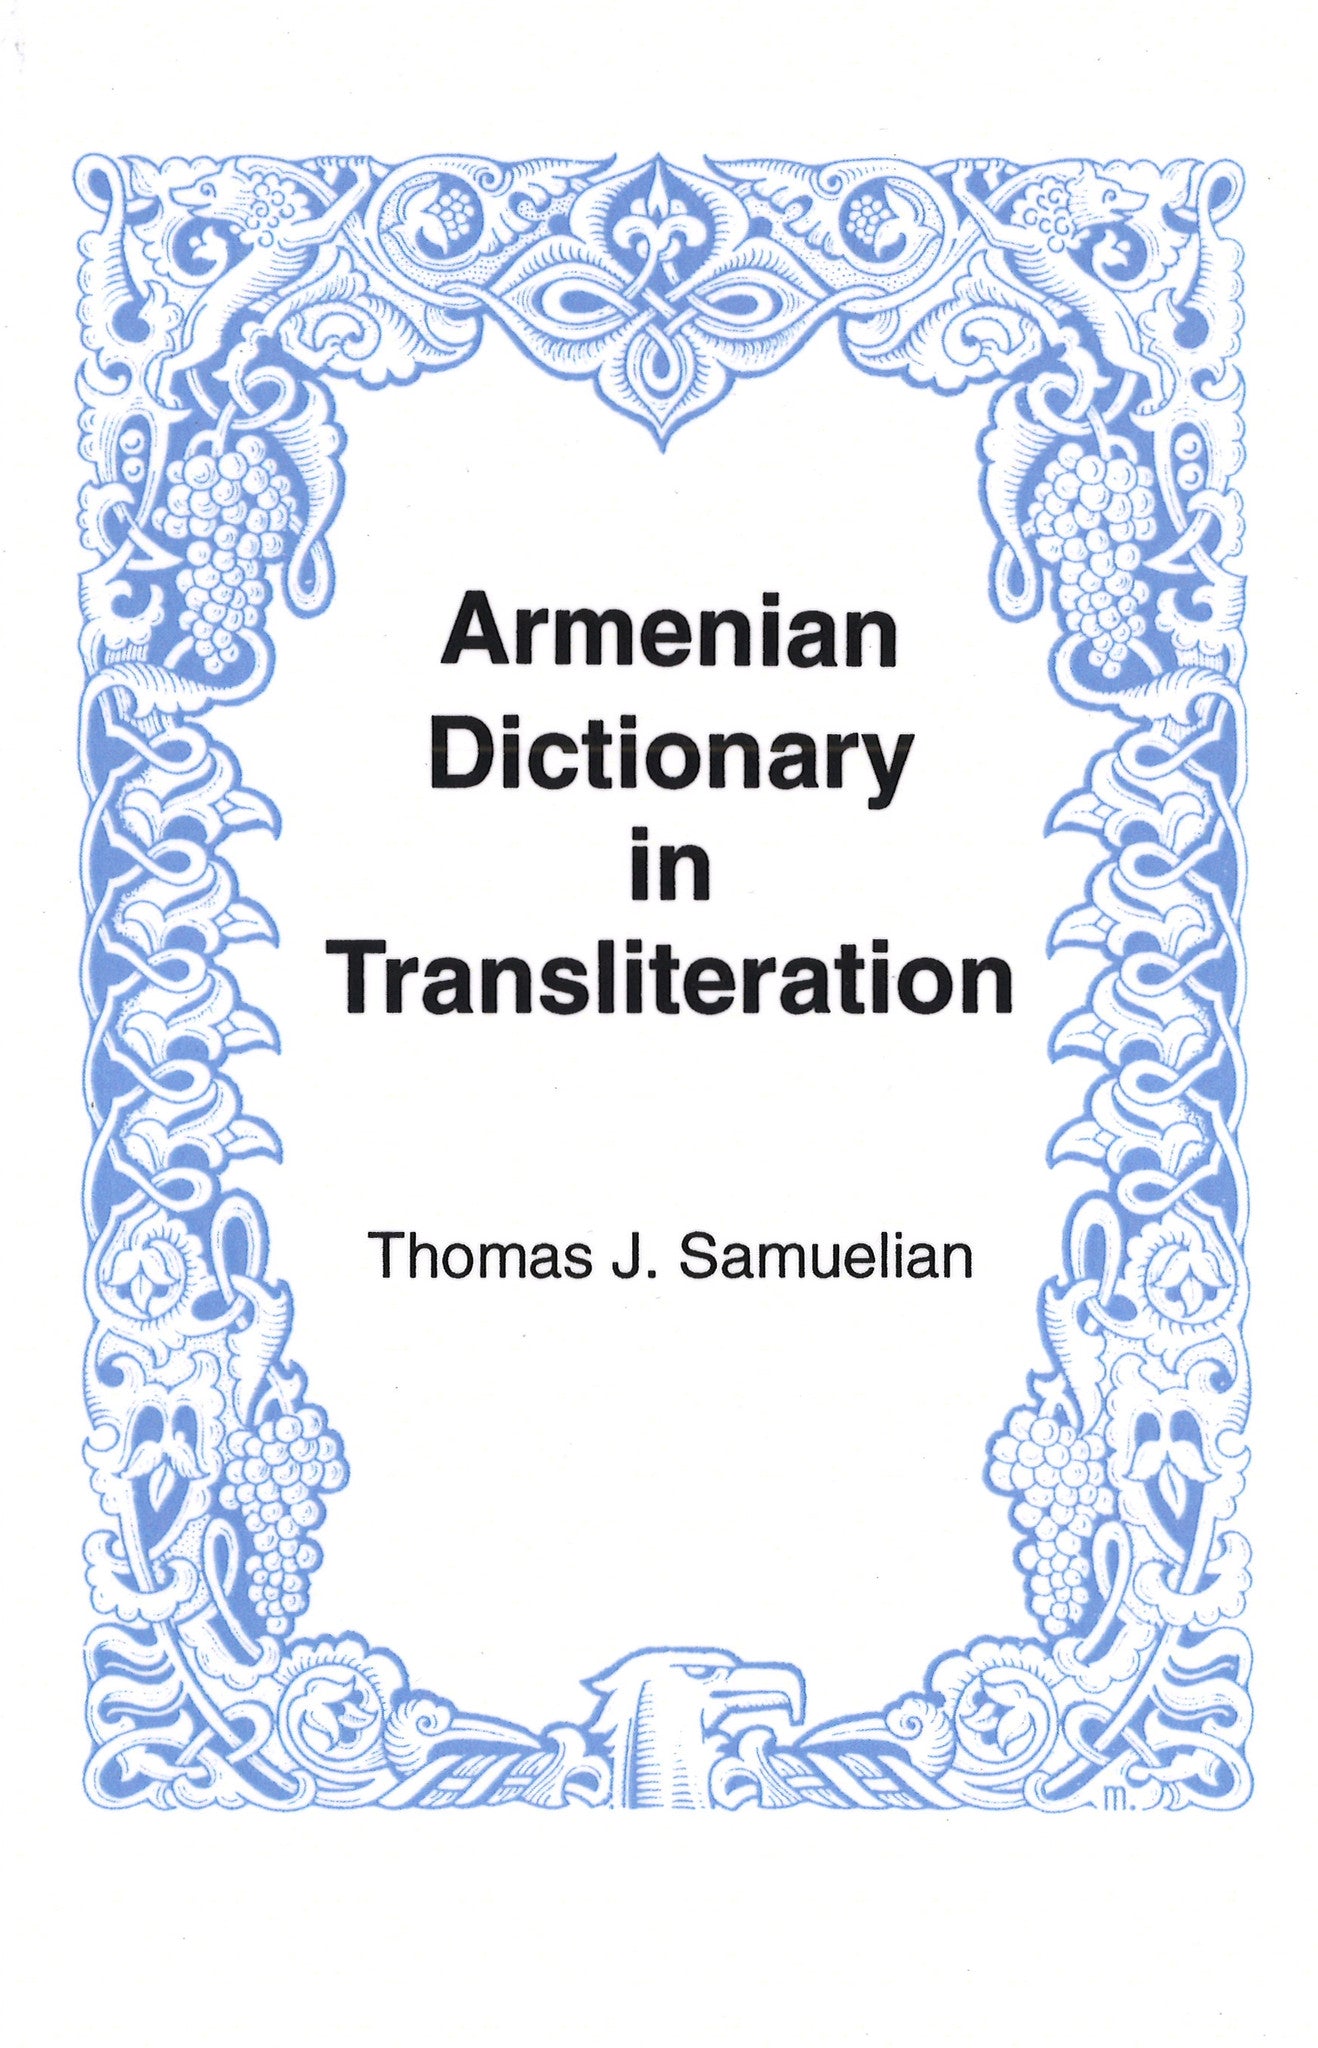 ARMENIAN DICTIONARY IN TRANSLITERATION: Western Pronunciation